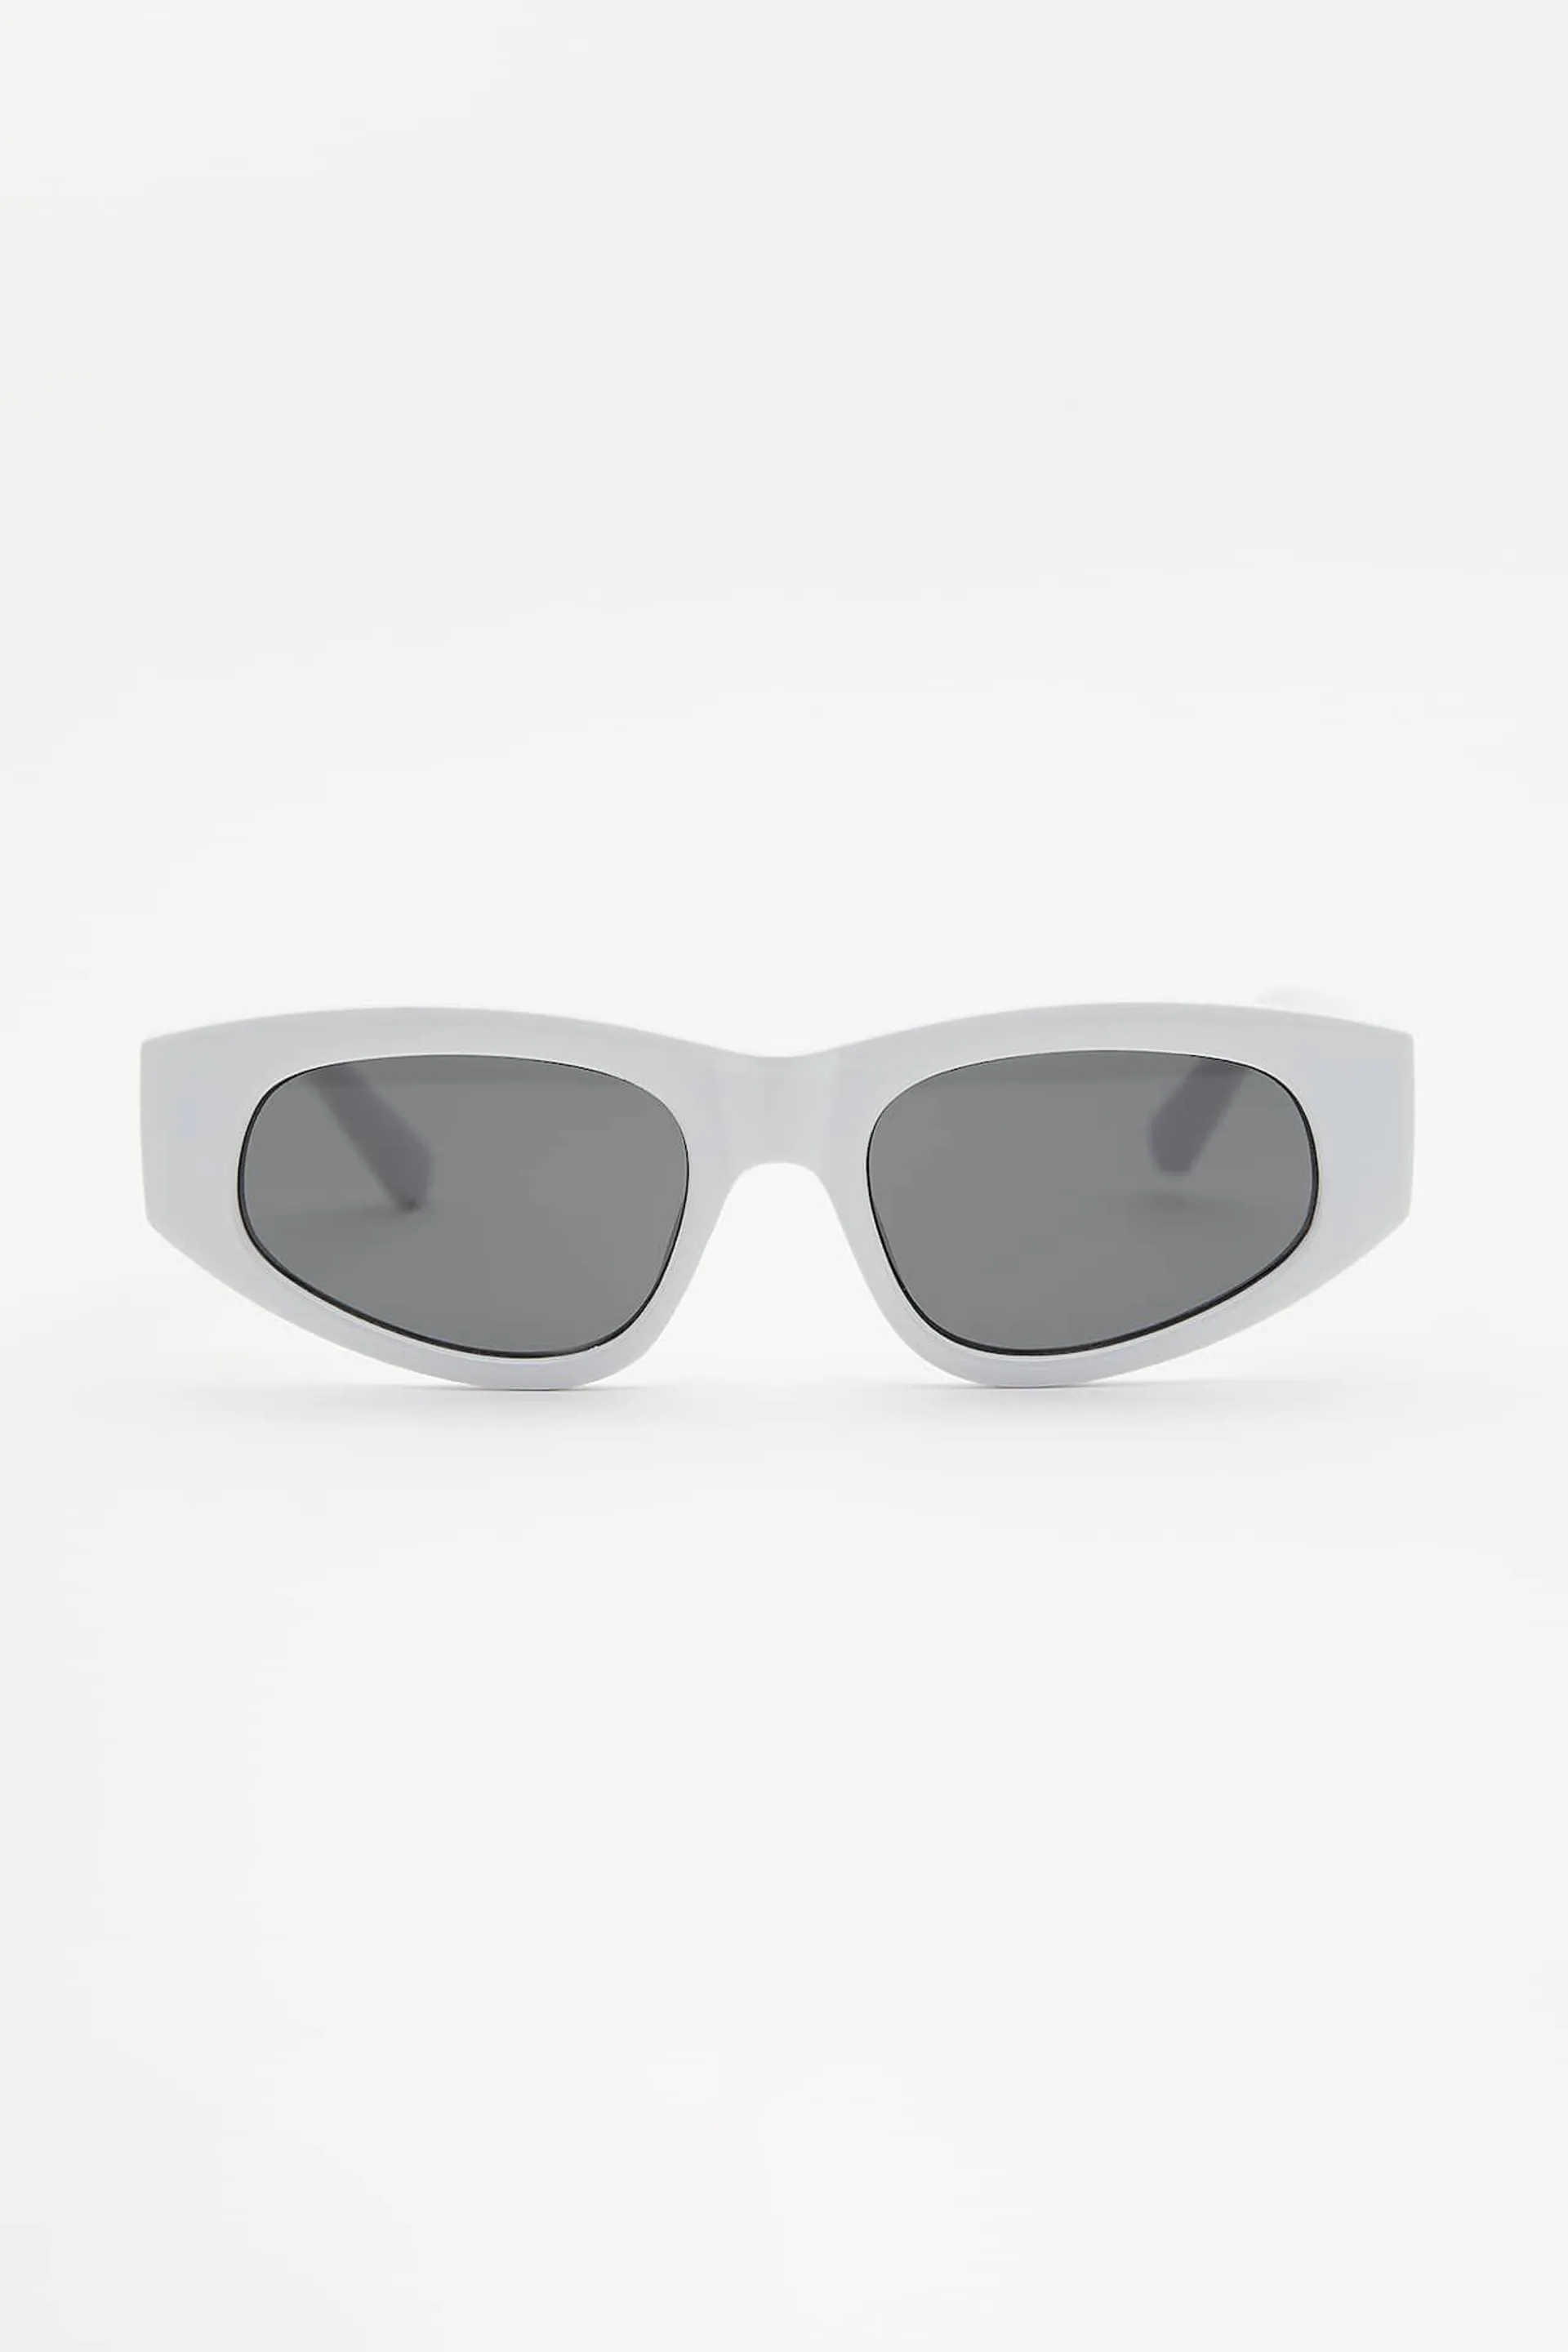 Geometric resin sunglasses